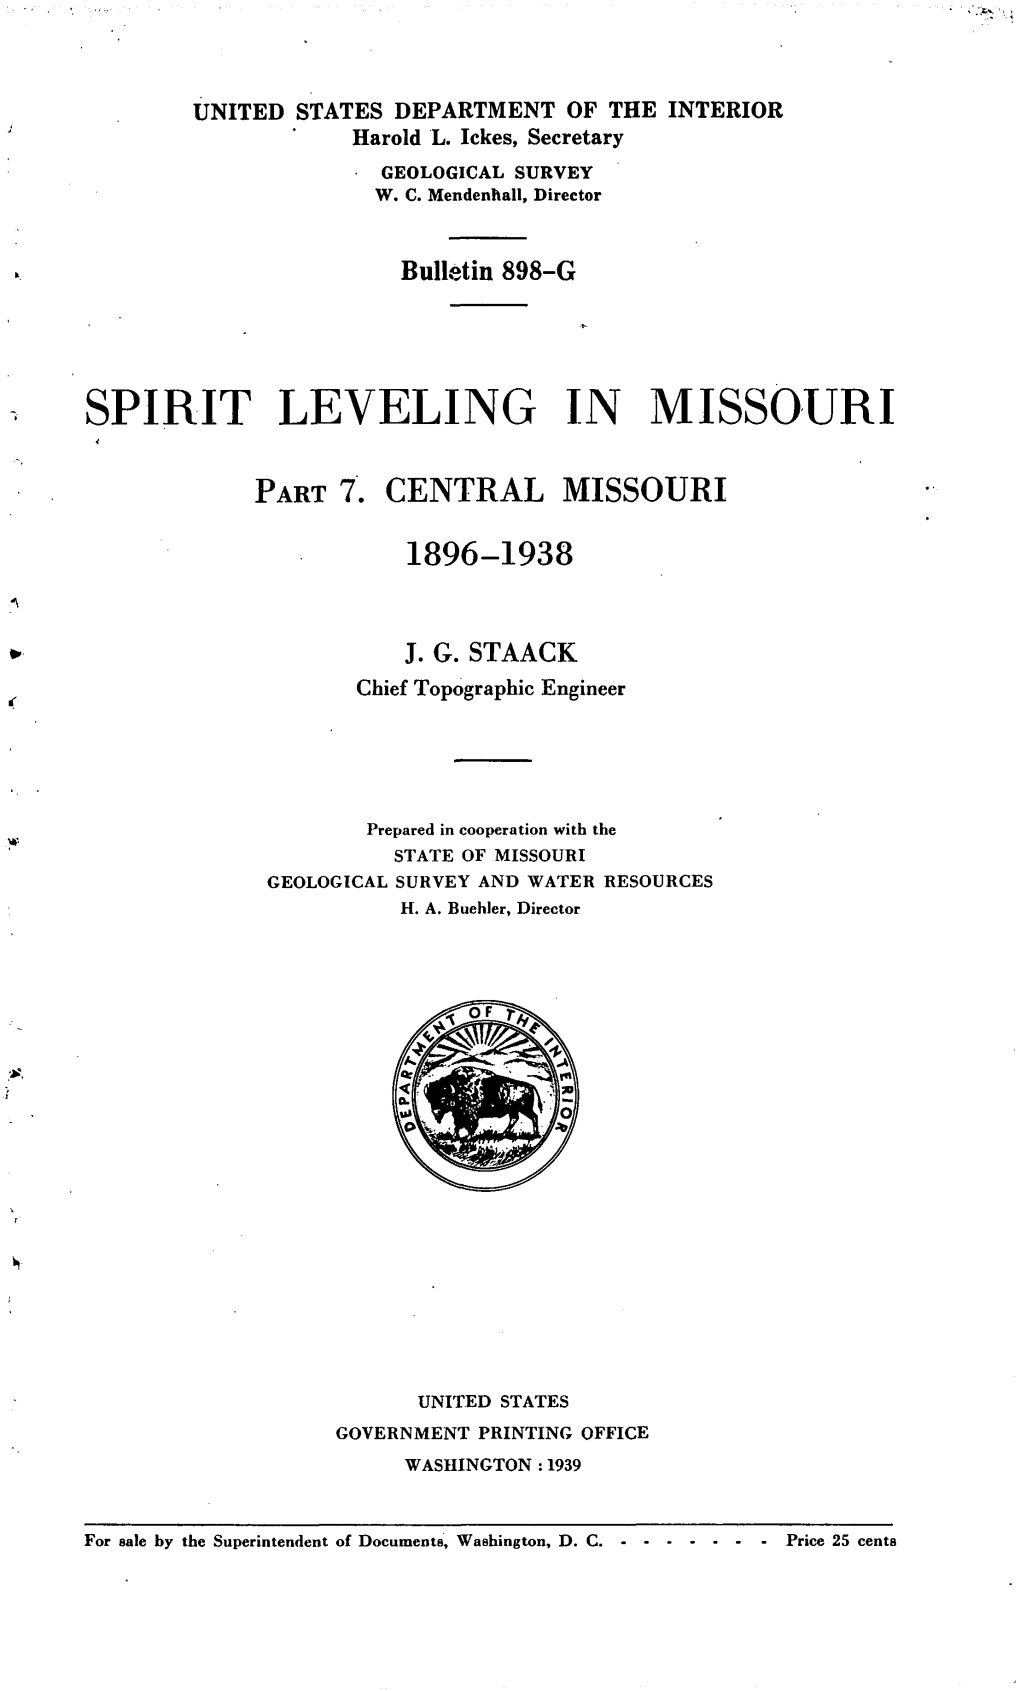 Spirit Leveling in Missouri